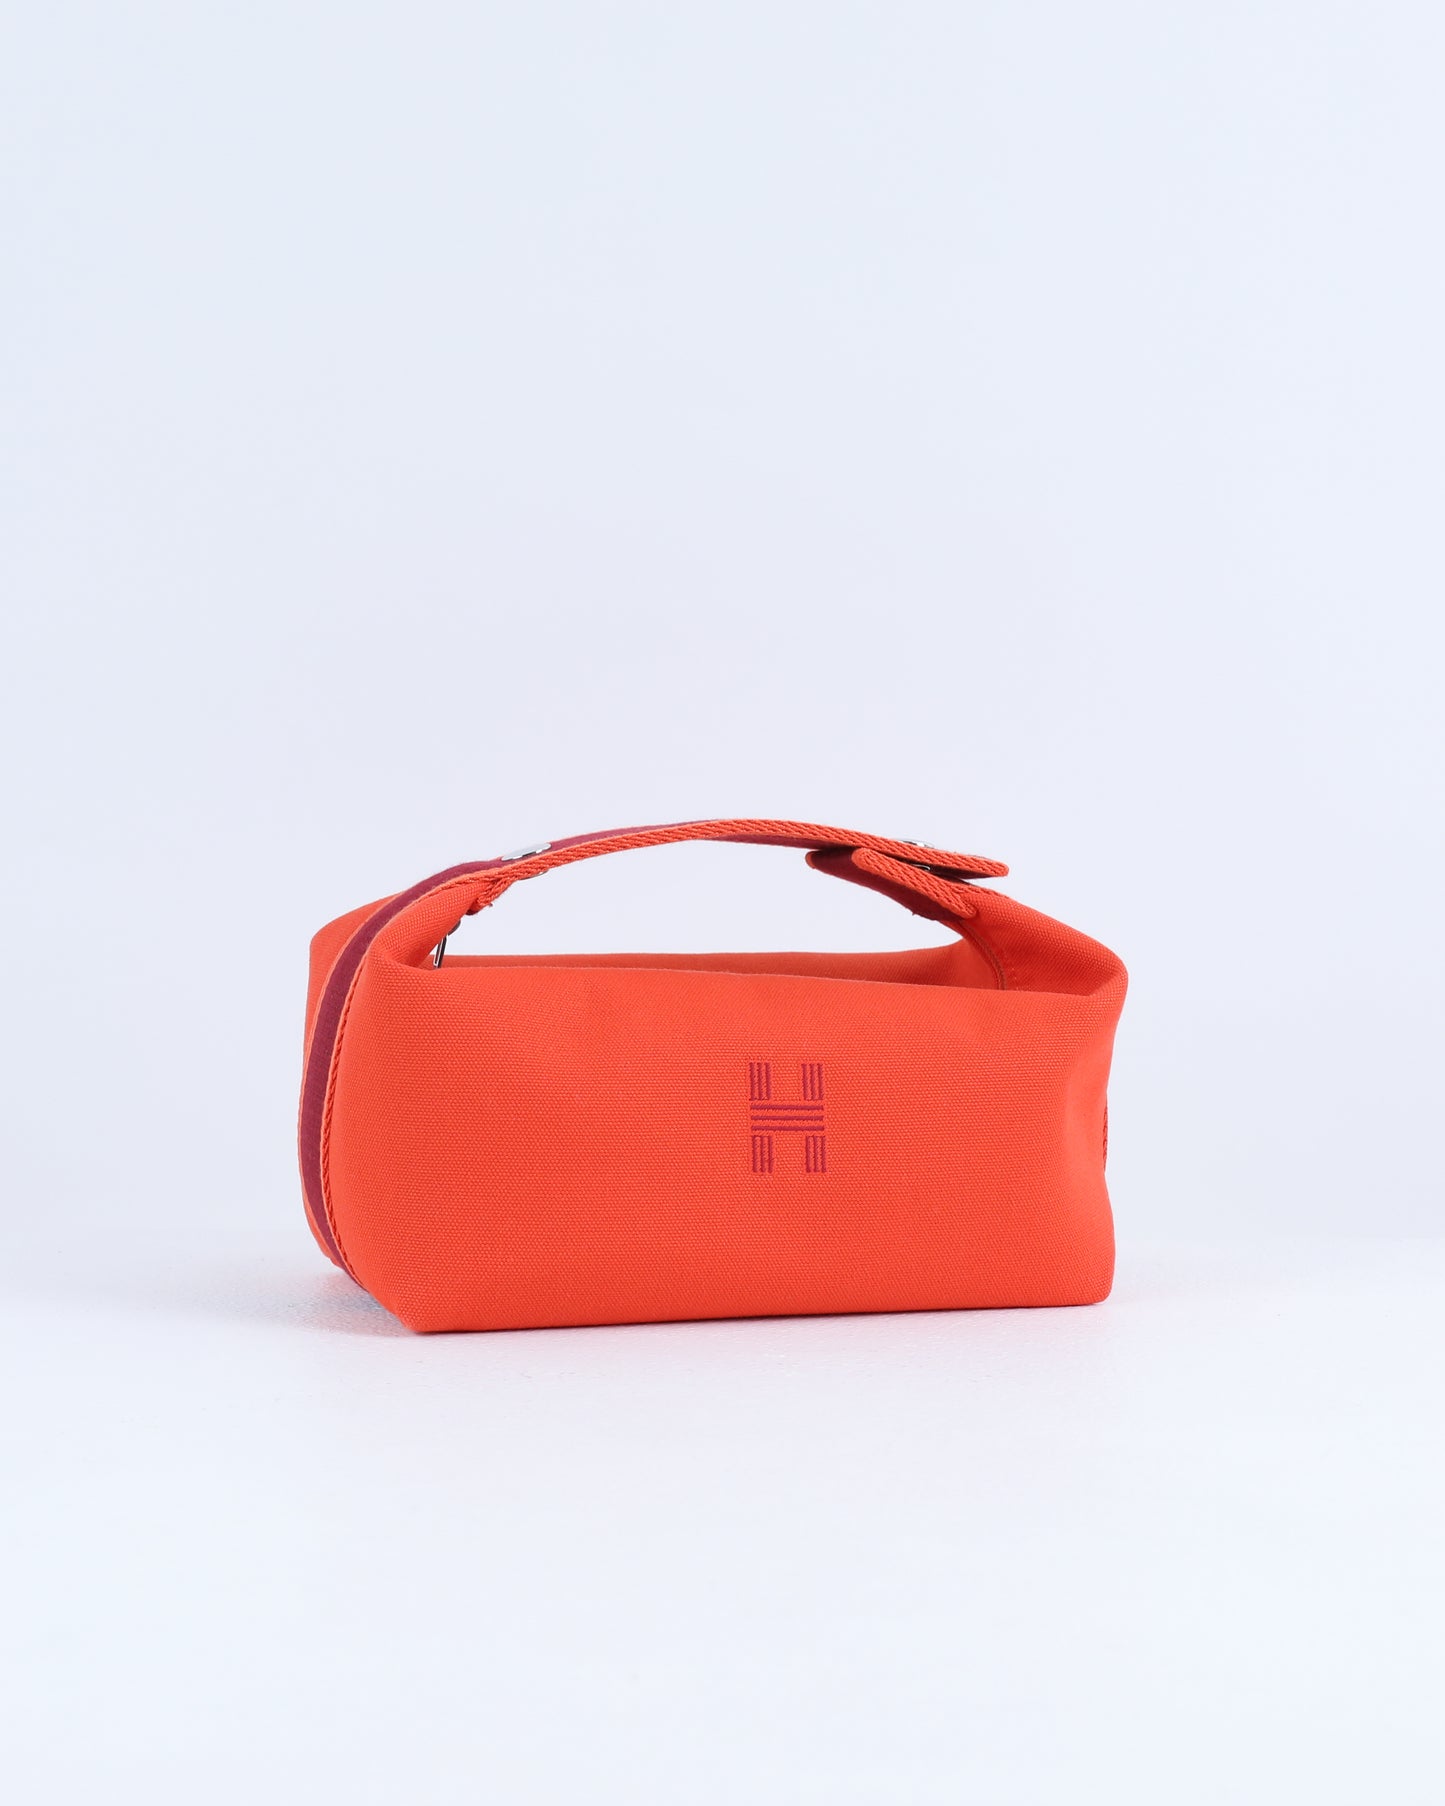 Bride-A-Brac Handbag PM size in Orange